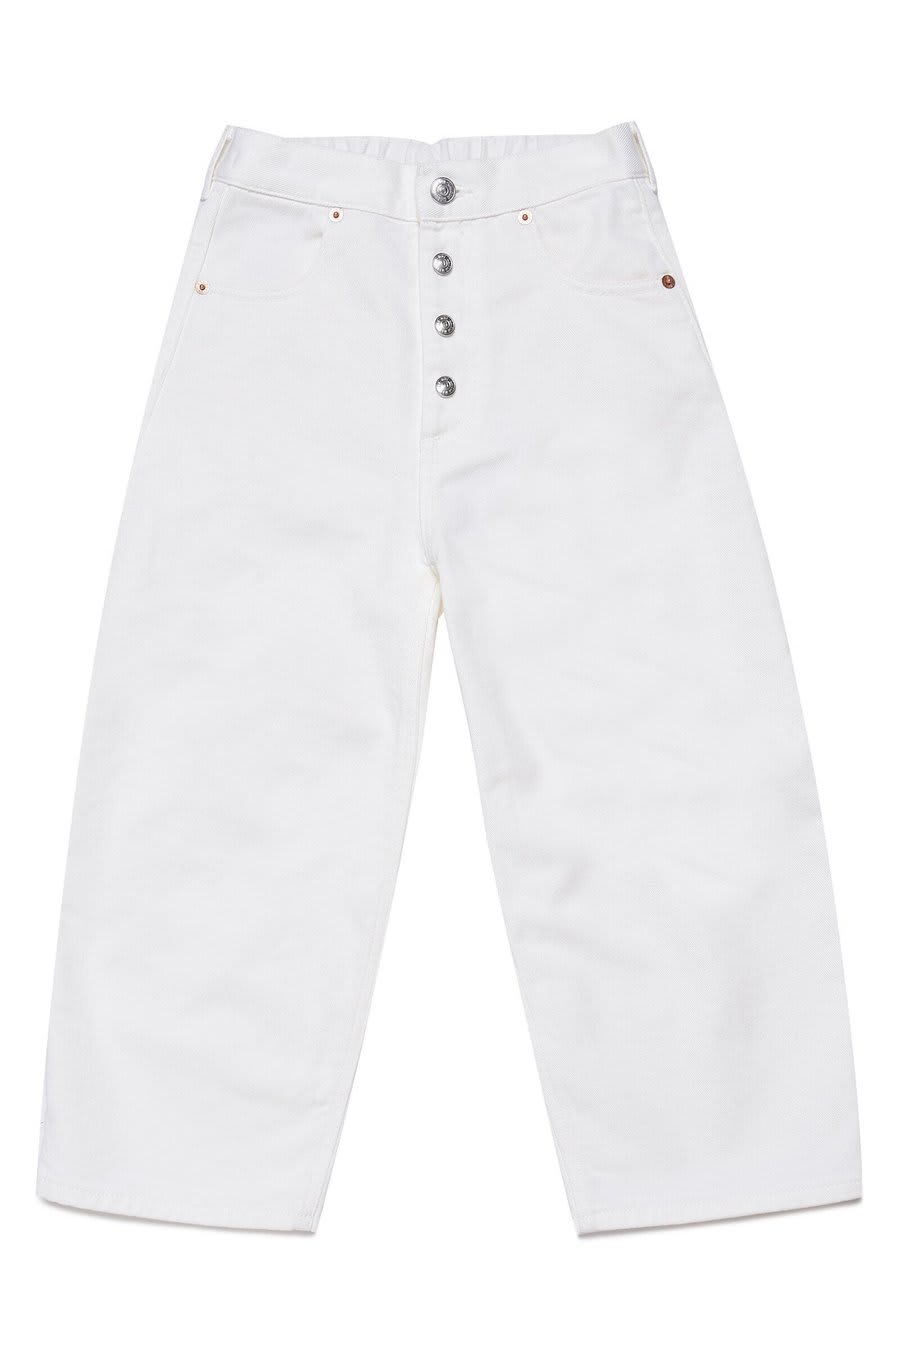 MM6 Maison Margiela White Denim Pants